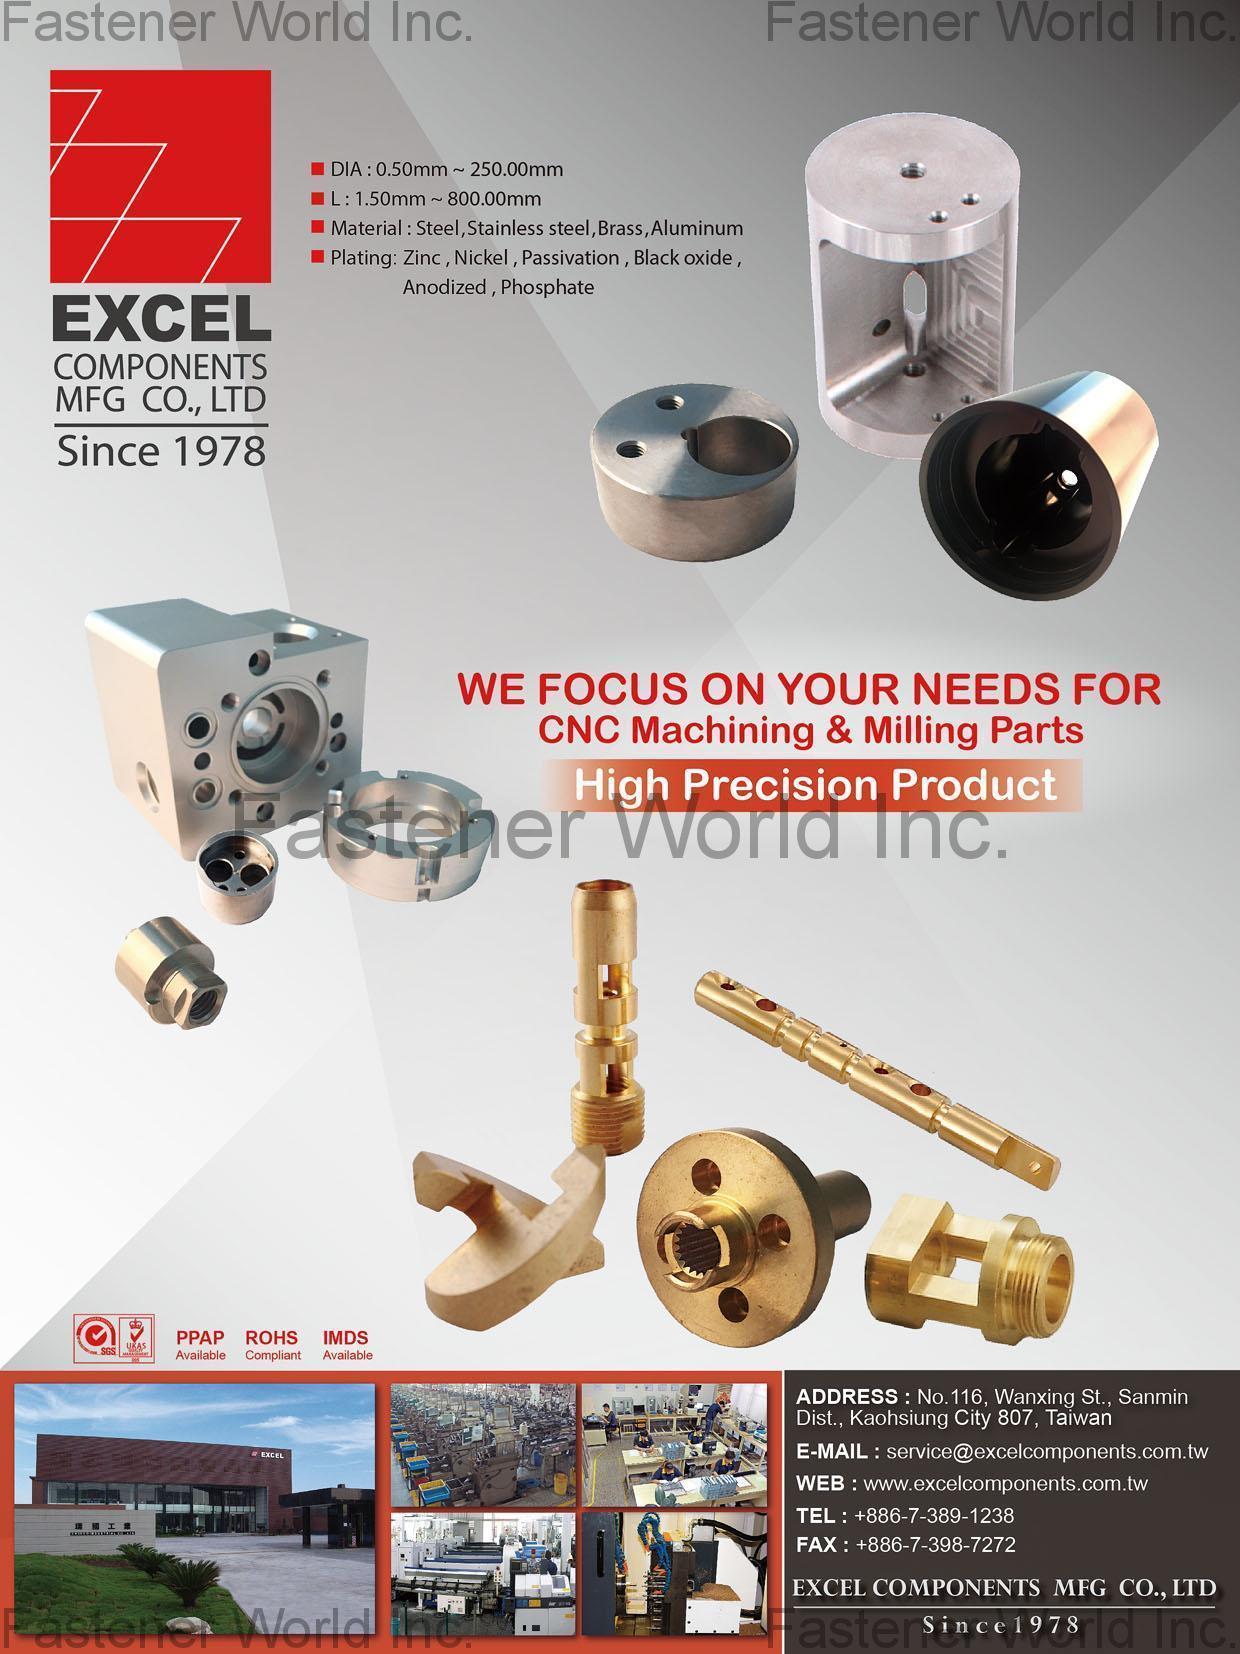 EXCEL COMPONENTS MFG. CO., LTD. , CNC Machining & Milling Parts (High Precision Product) , Cnc Machining Parts